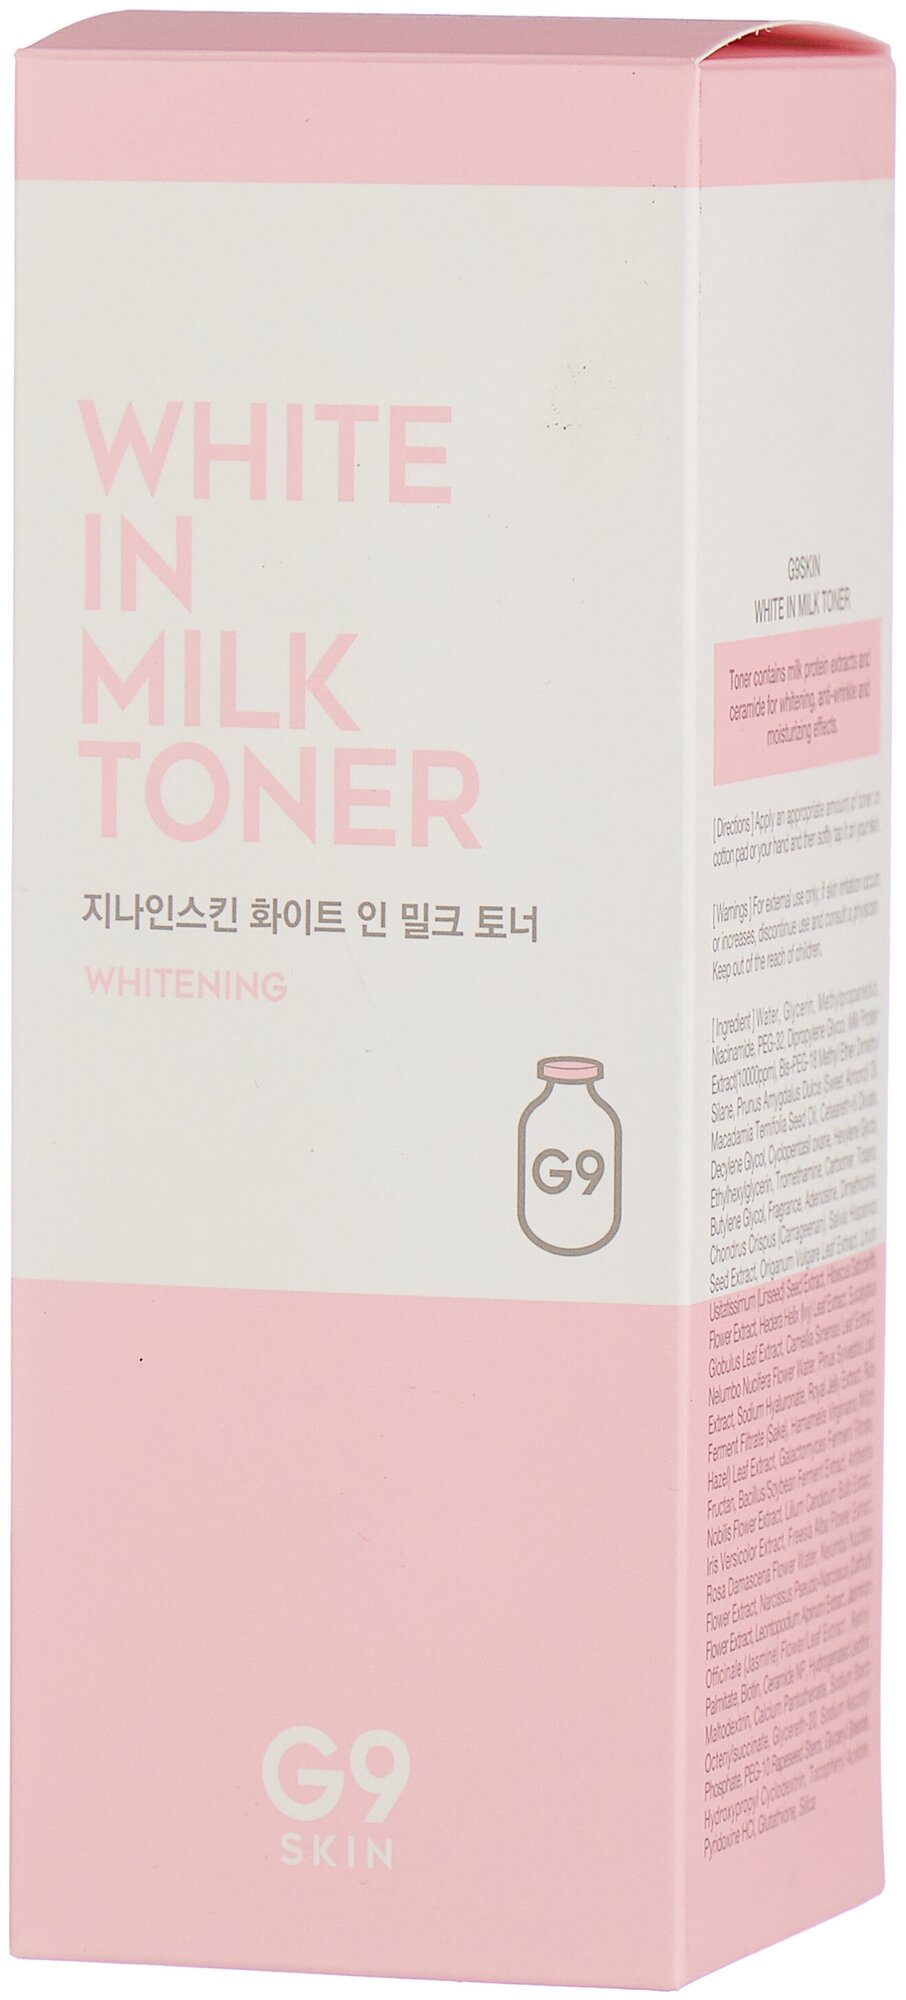 Тонер для лица осветляющий G9SKIN White In Milk Toner (300 мл)